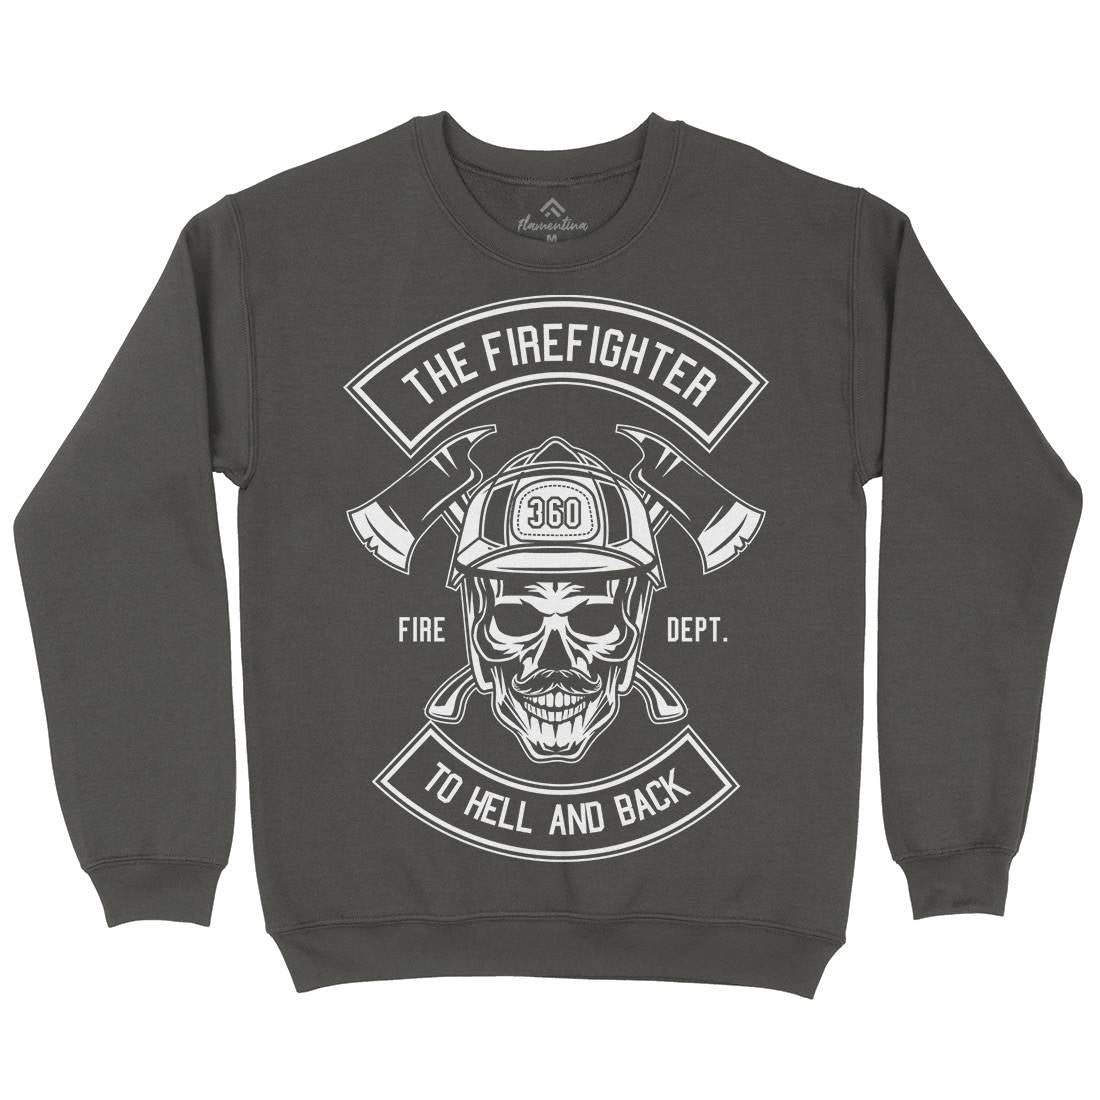 The Fire Fighter Kids Crew Neck Sweatshirt Firefighters B651